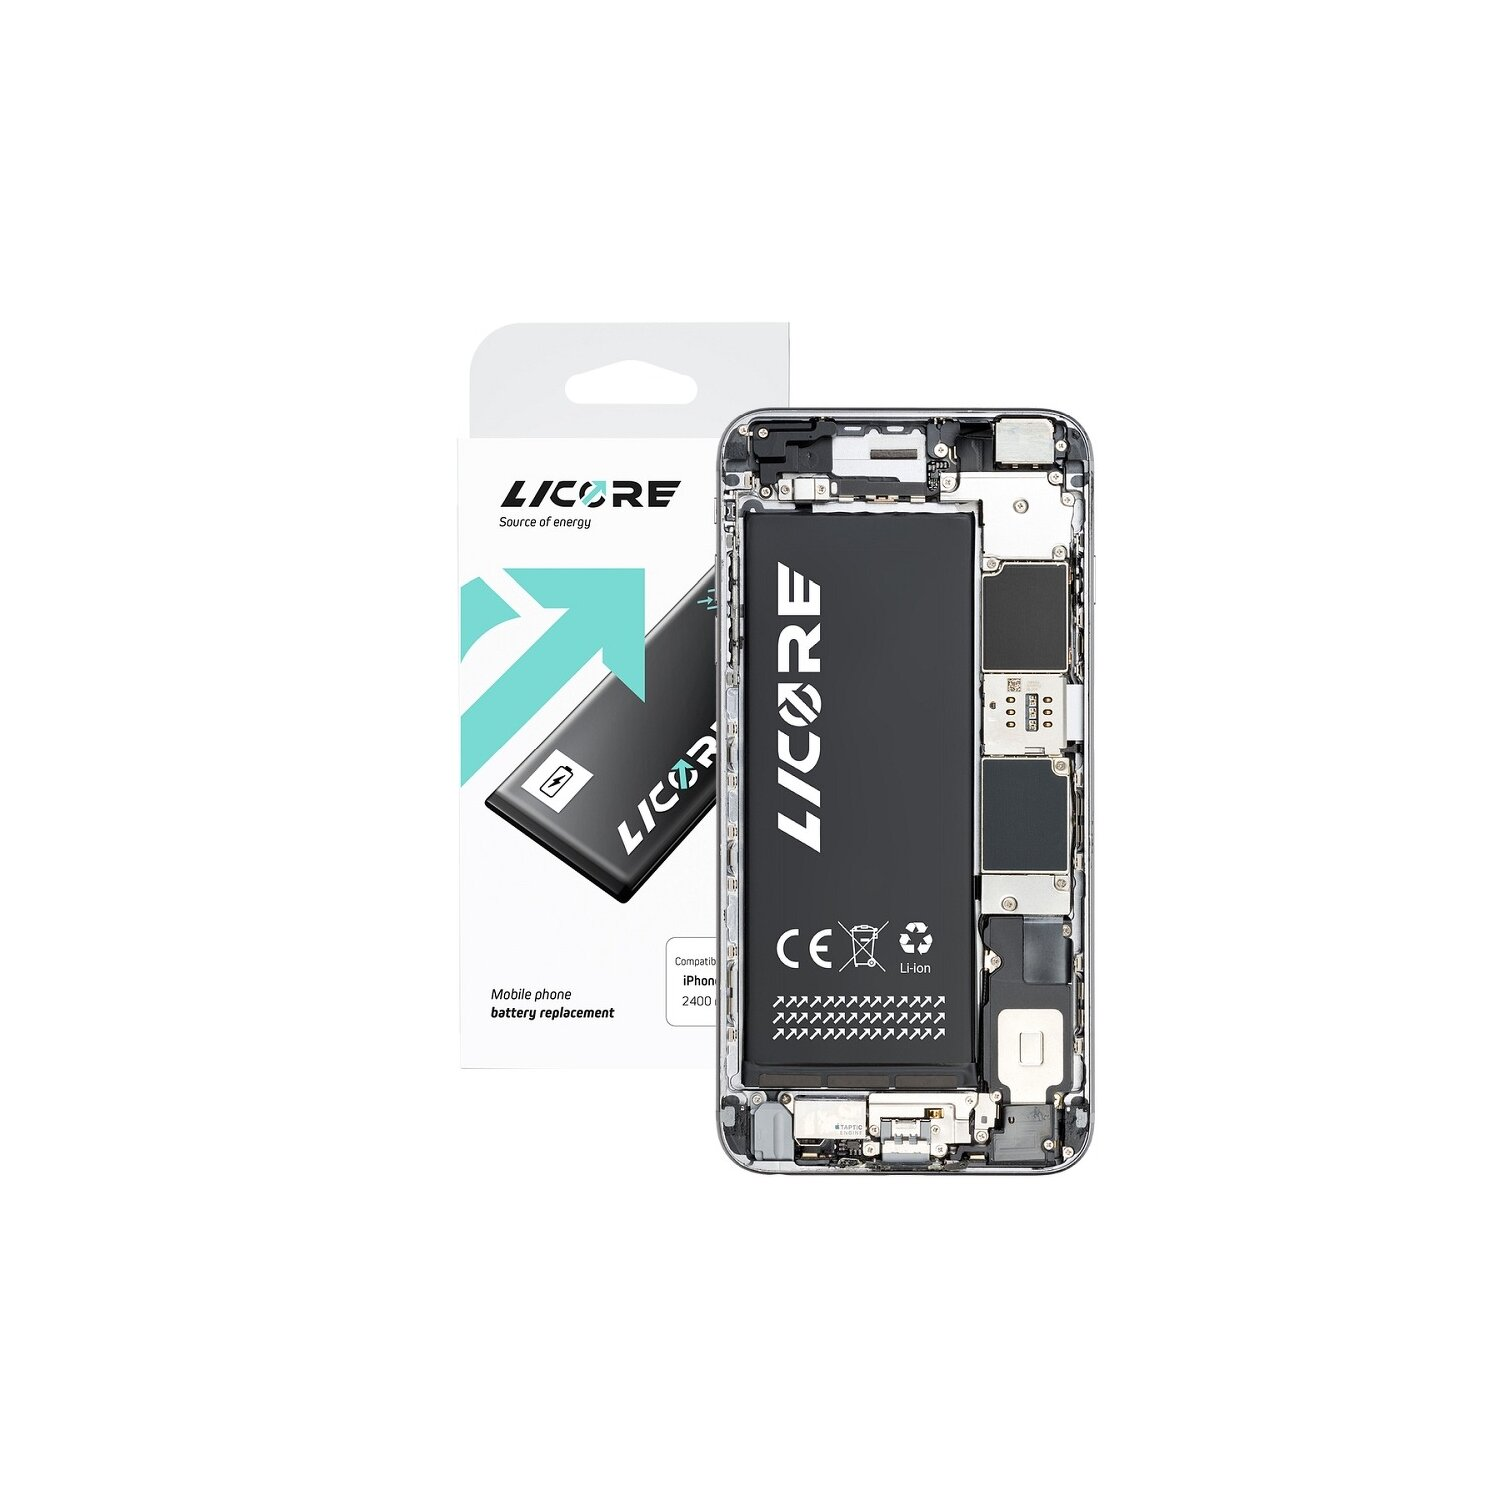 COFI Licore Akku kompatibel 4s Ersatz 1430mAh li-Ion iPhone Akku mit